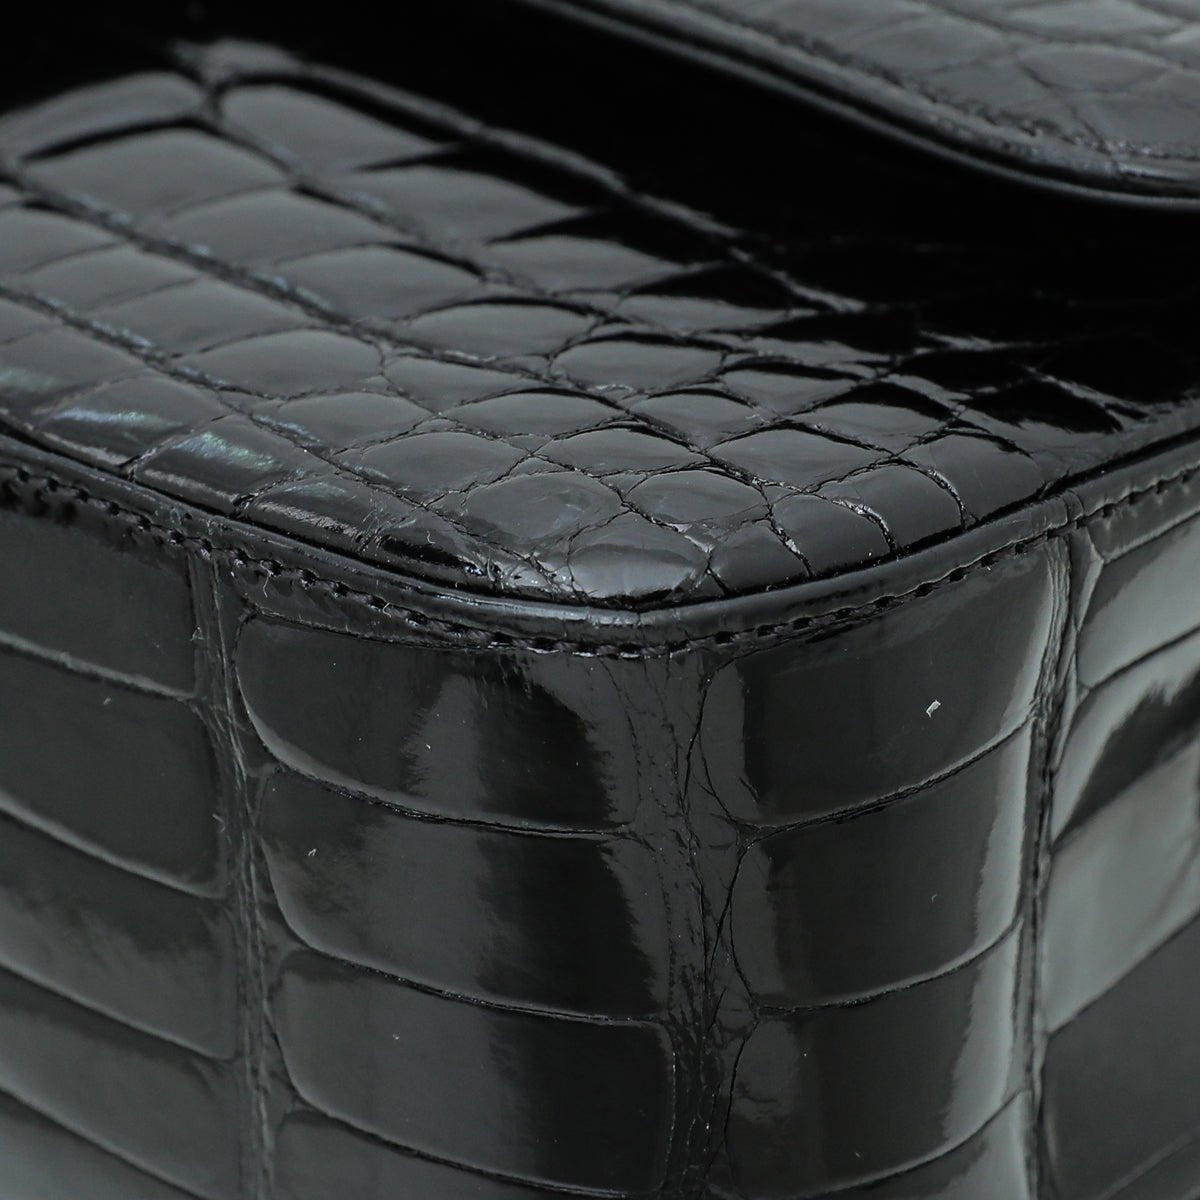 Chanel - Chanel Black CC Alligator Classic Double Flap Medium Bag | The Closet